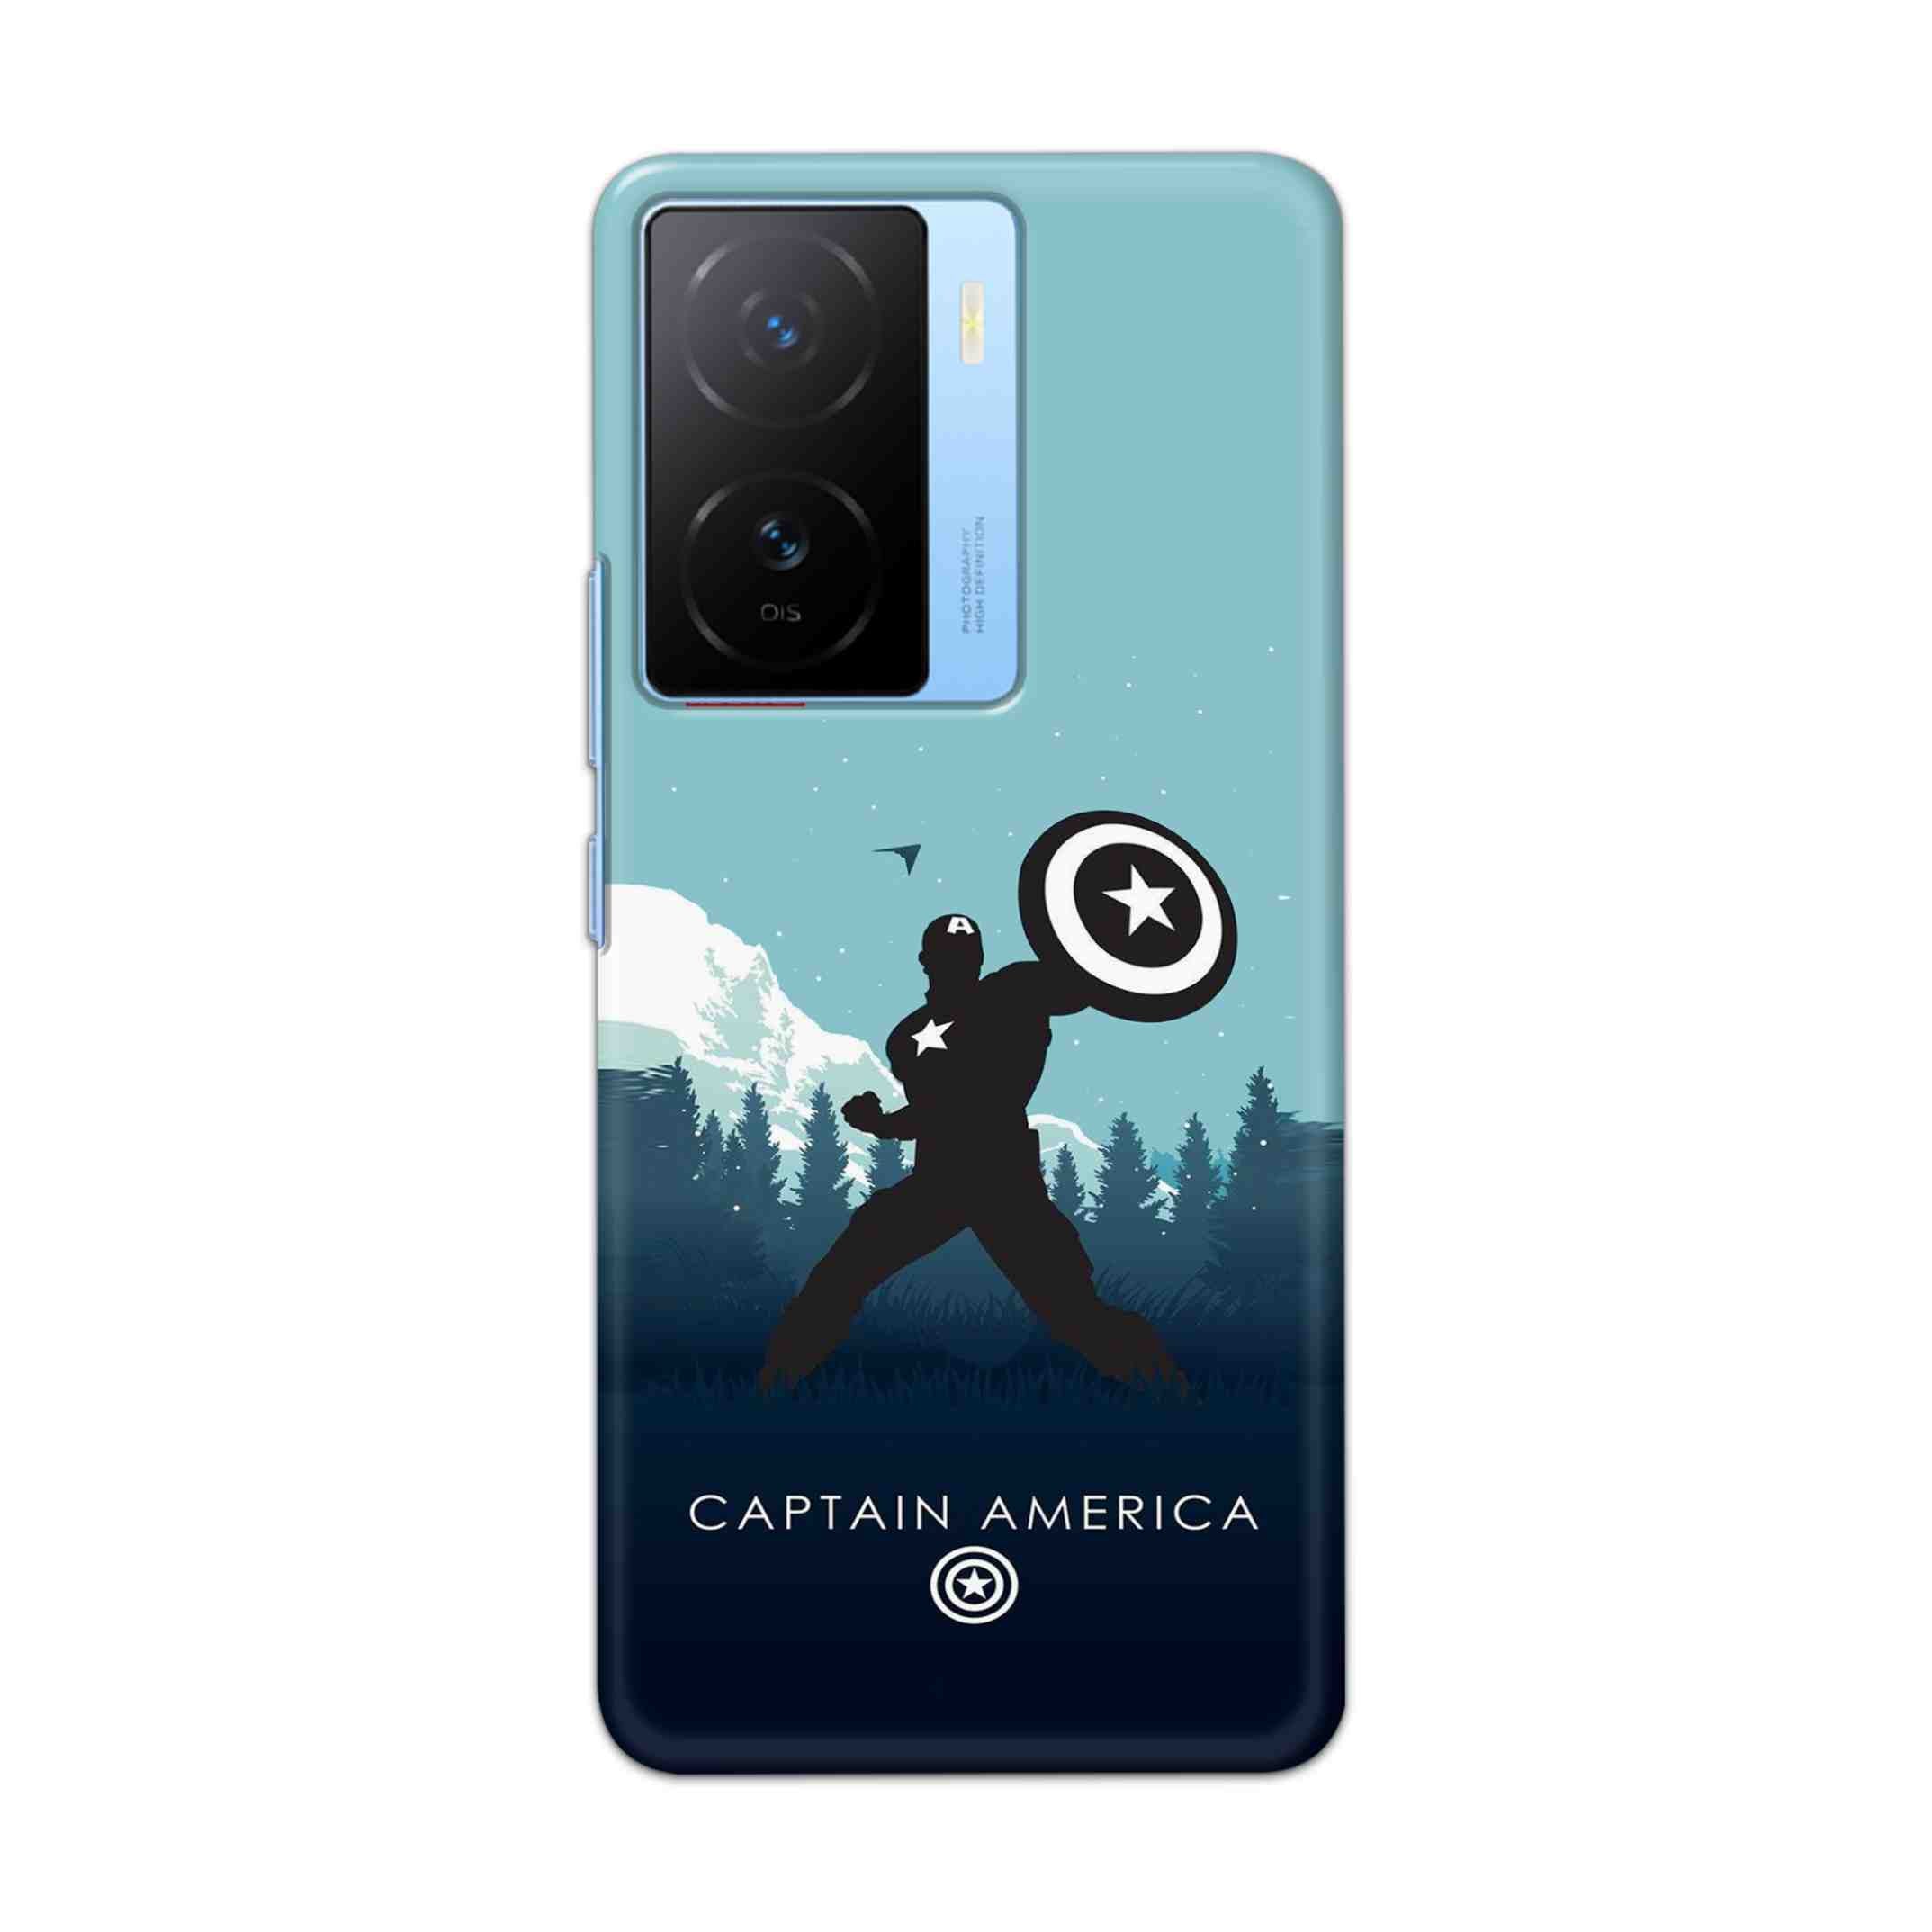 Buy Captain America Hard Back Mobile Phone Case/Cover For iQOO Z7s Online